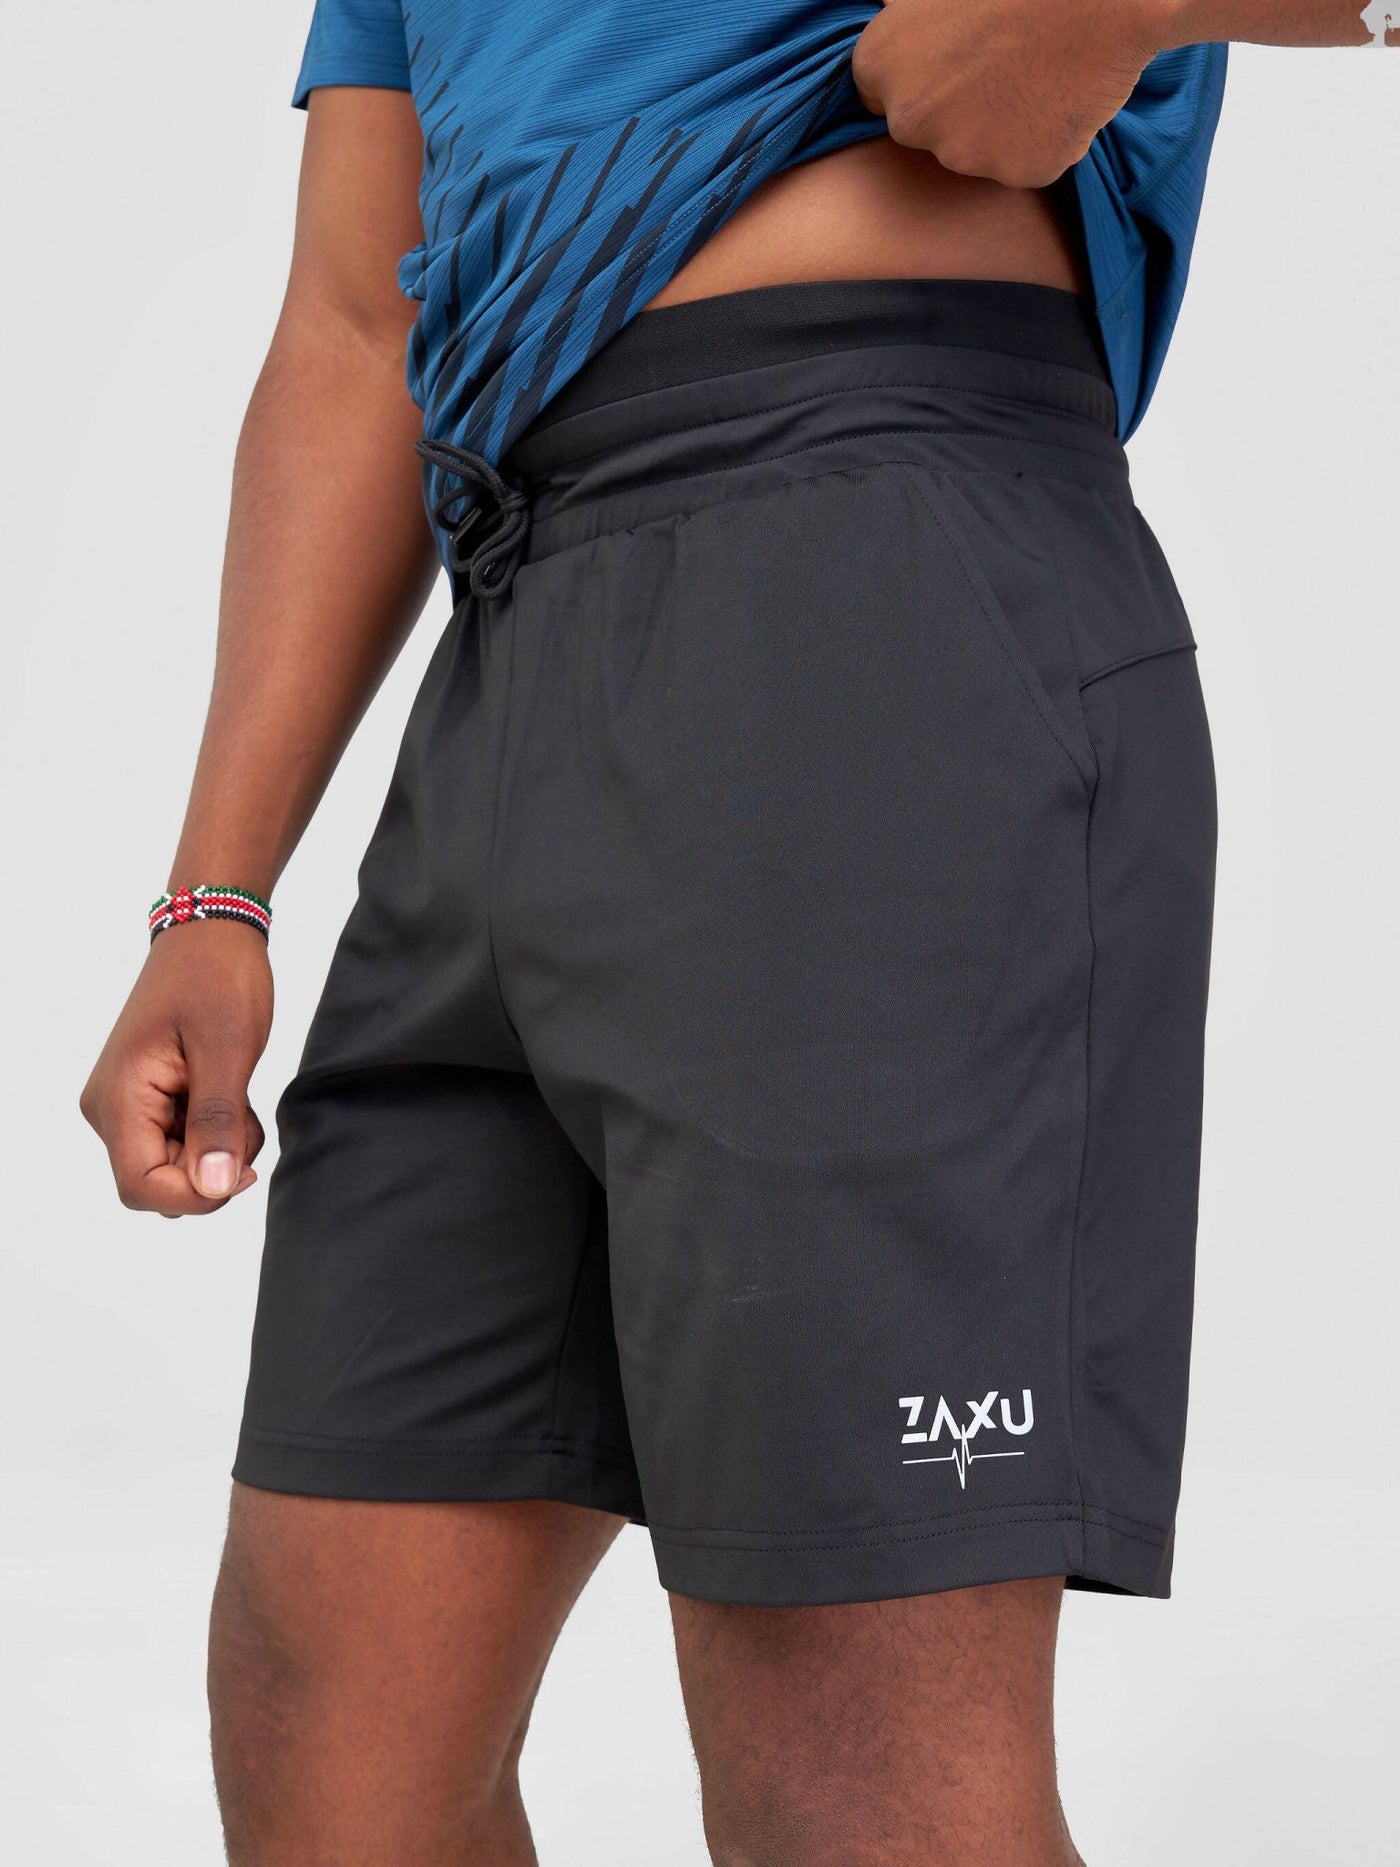 Zaxu Sports Jabali Shorts - Black - Shopzetu